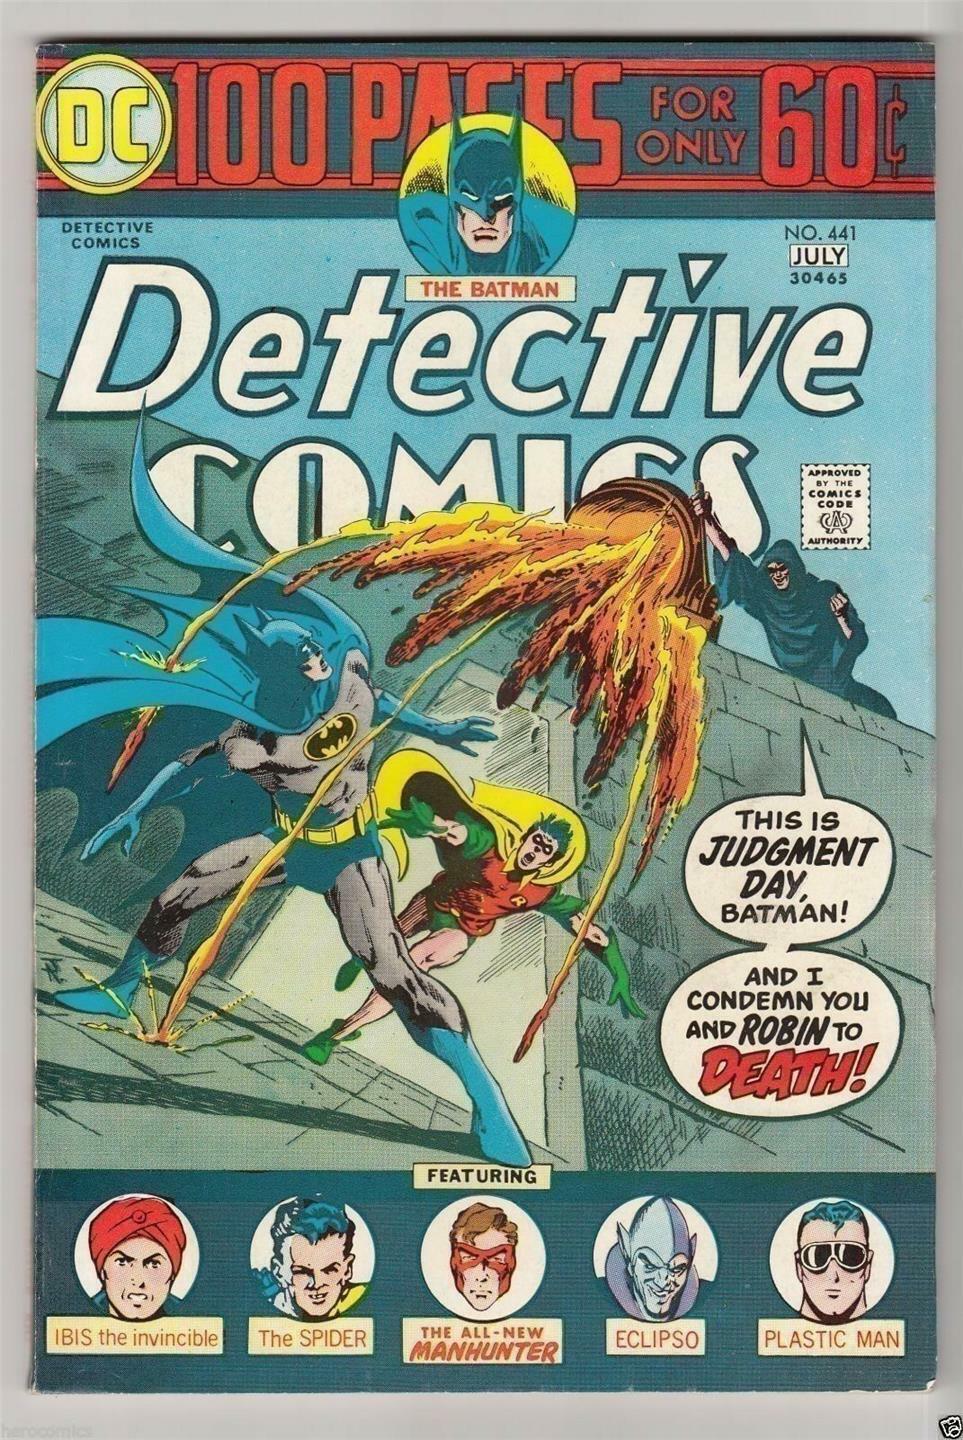 BATMAN Detective Comics #441 DC Silver Age Walt SIMONSON MANHUNTER DC 100 page